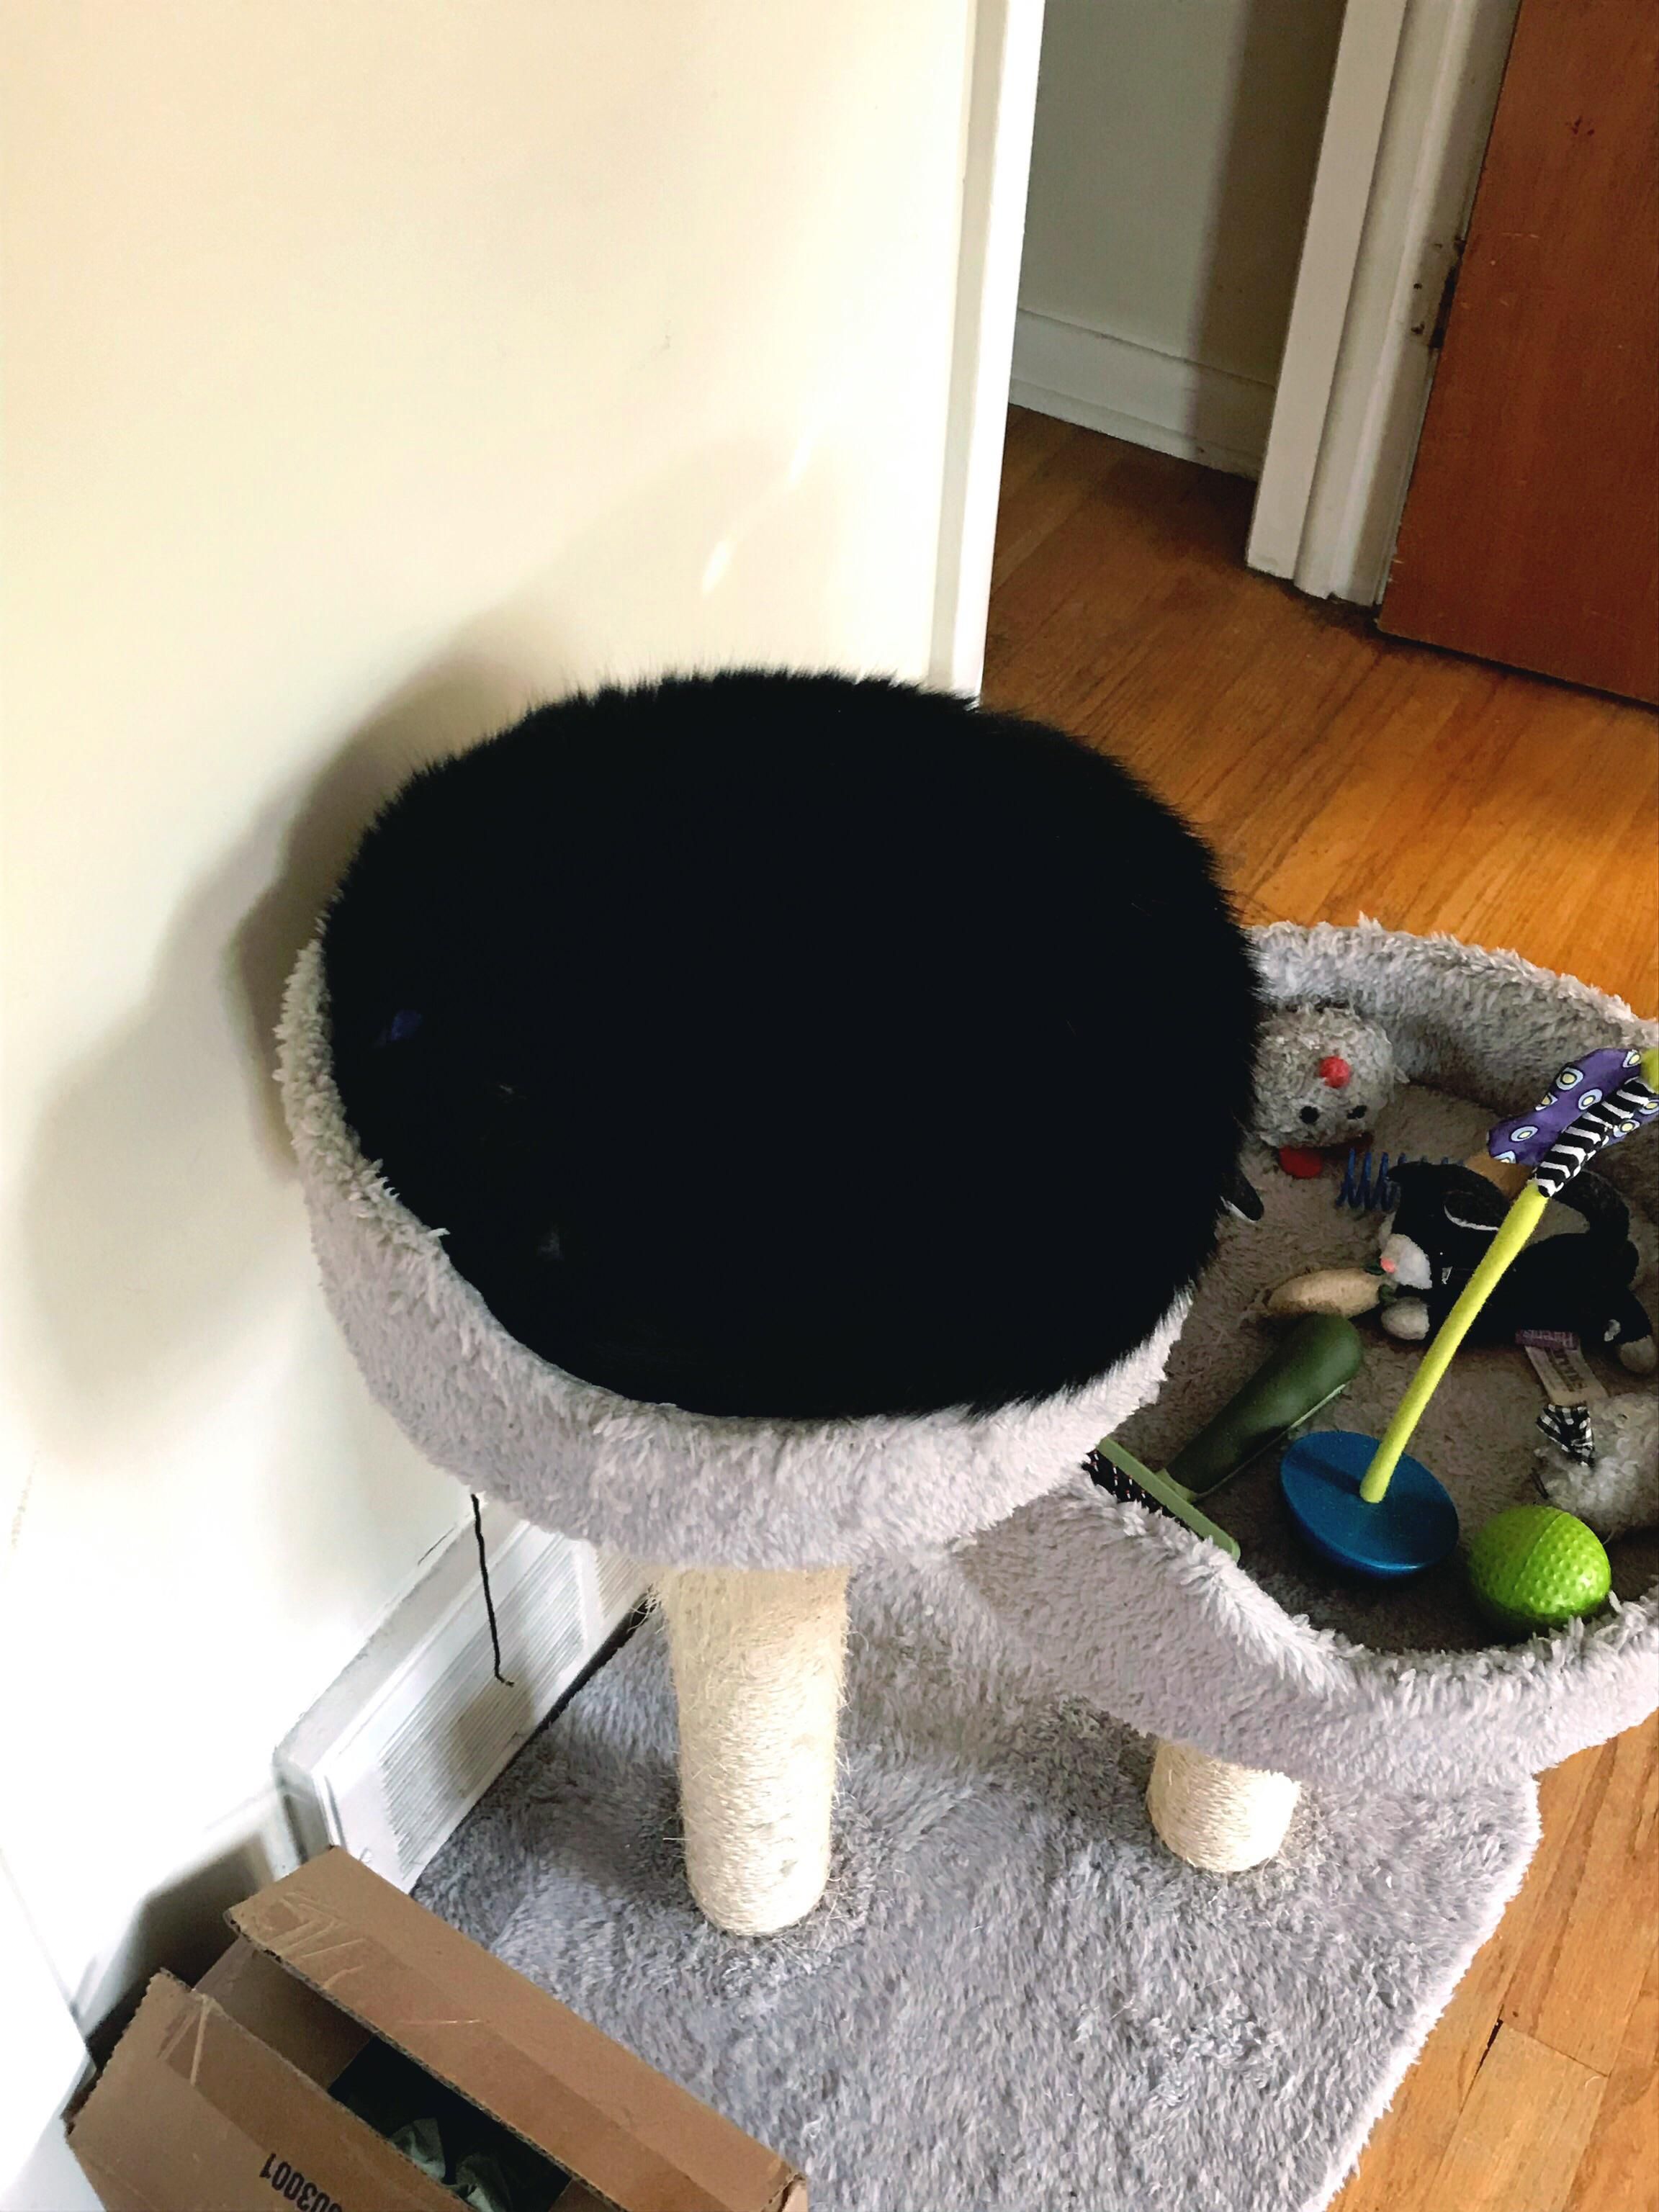 My cat kinda looks like a fuzzy stool top